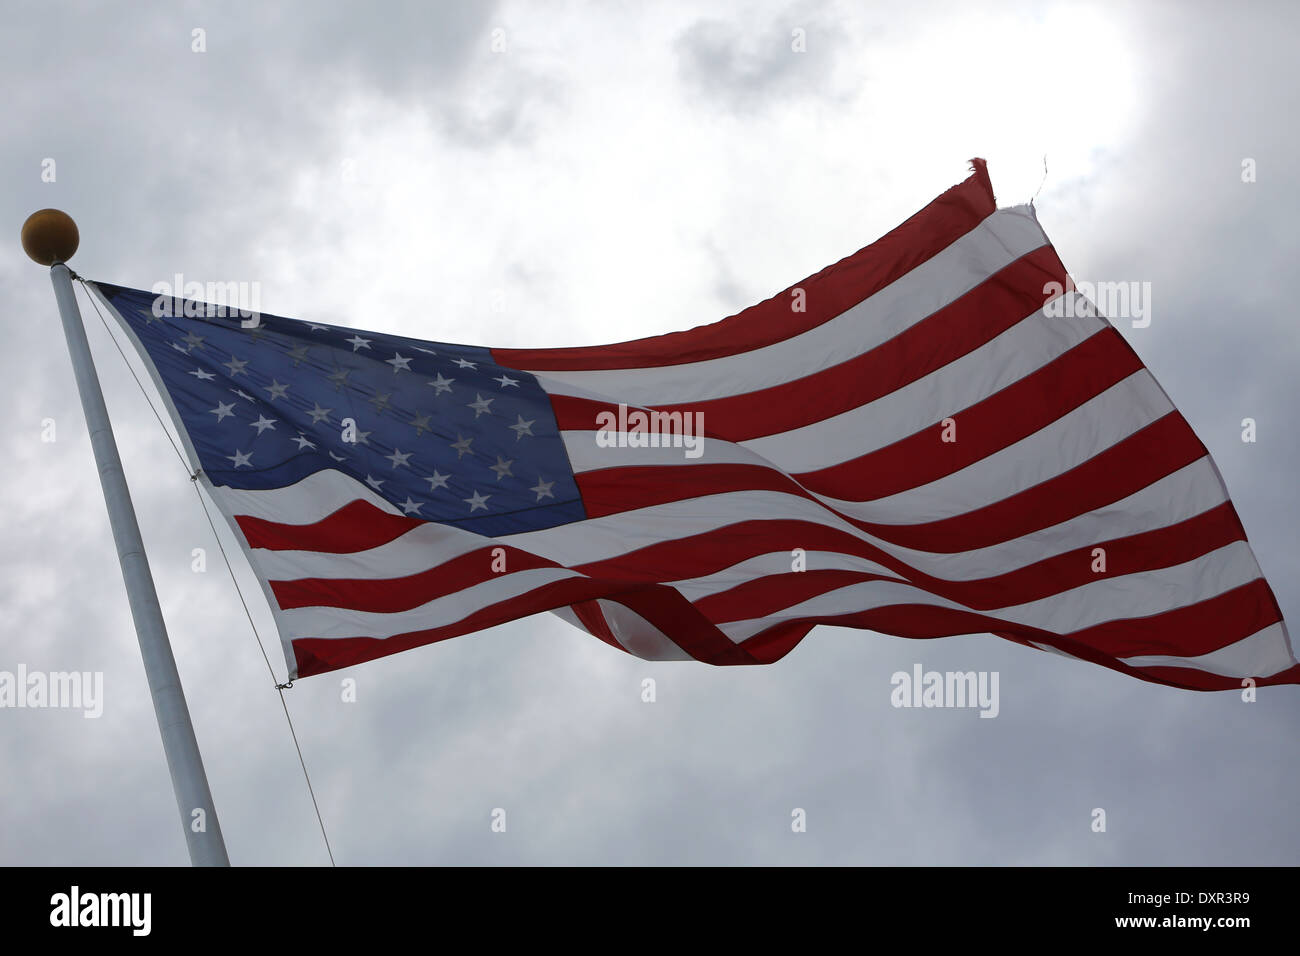 Merritt Iceland, United States of America National flag of USA Stock Photo